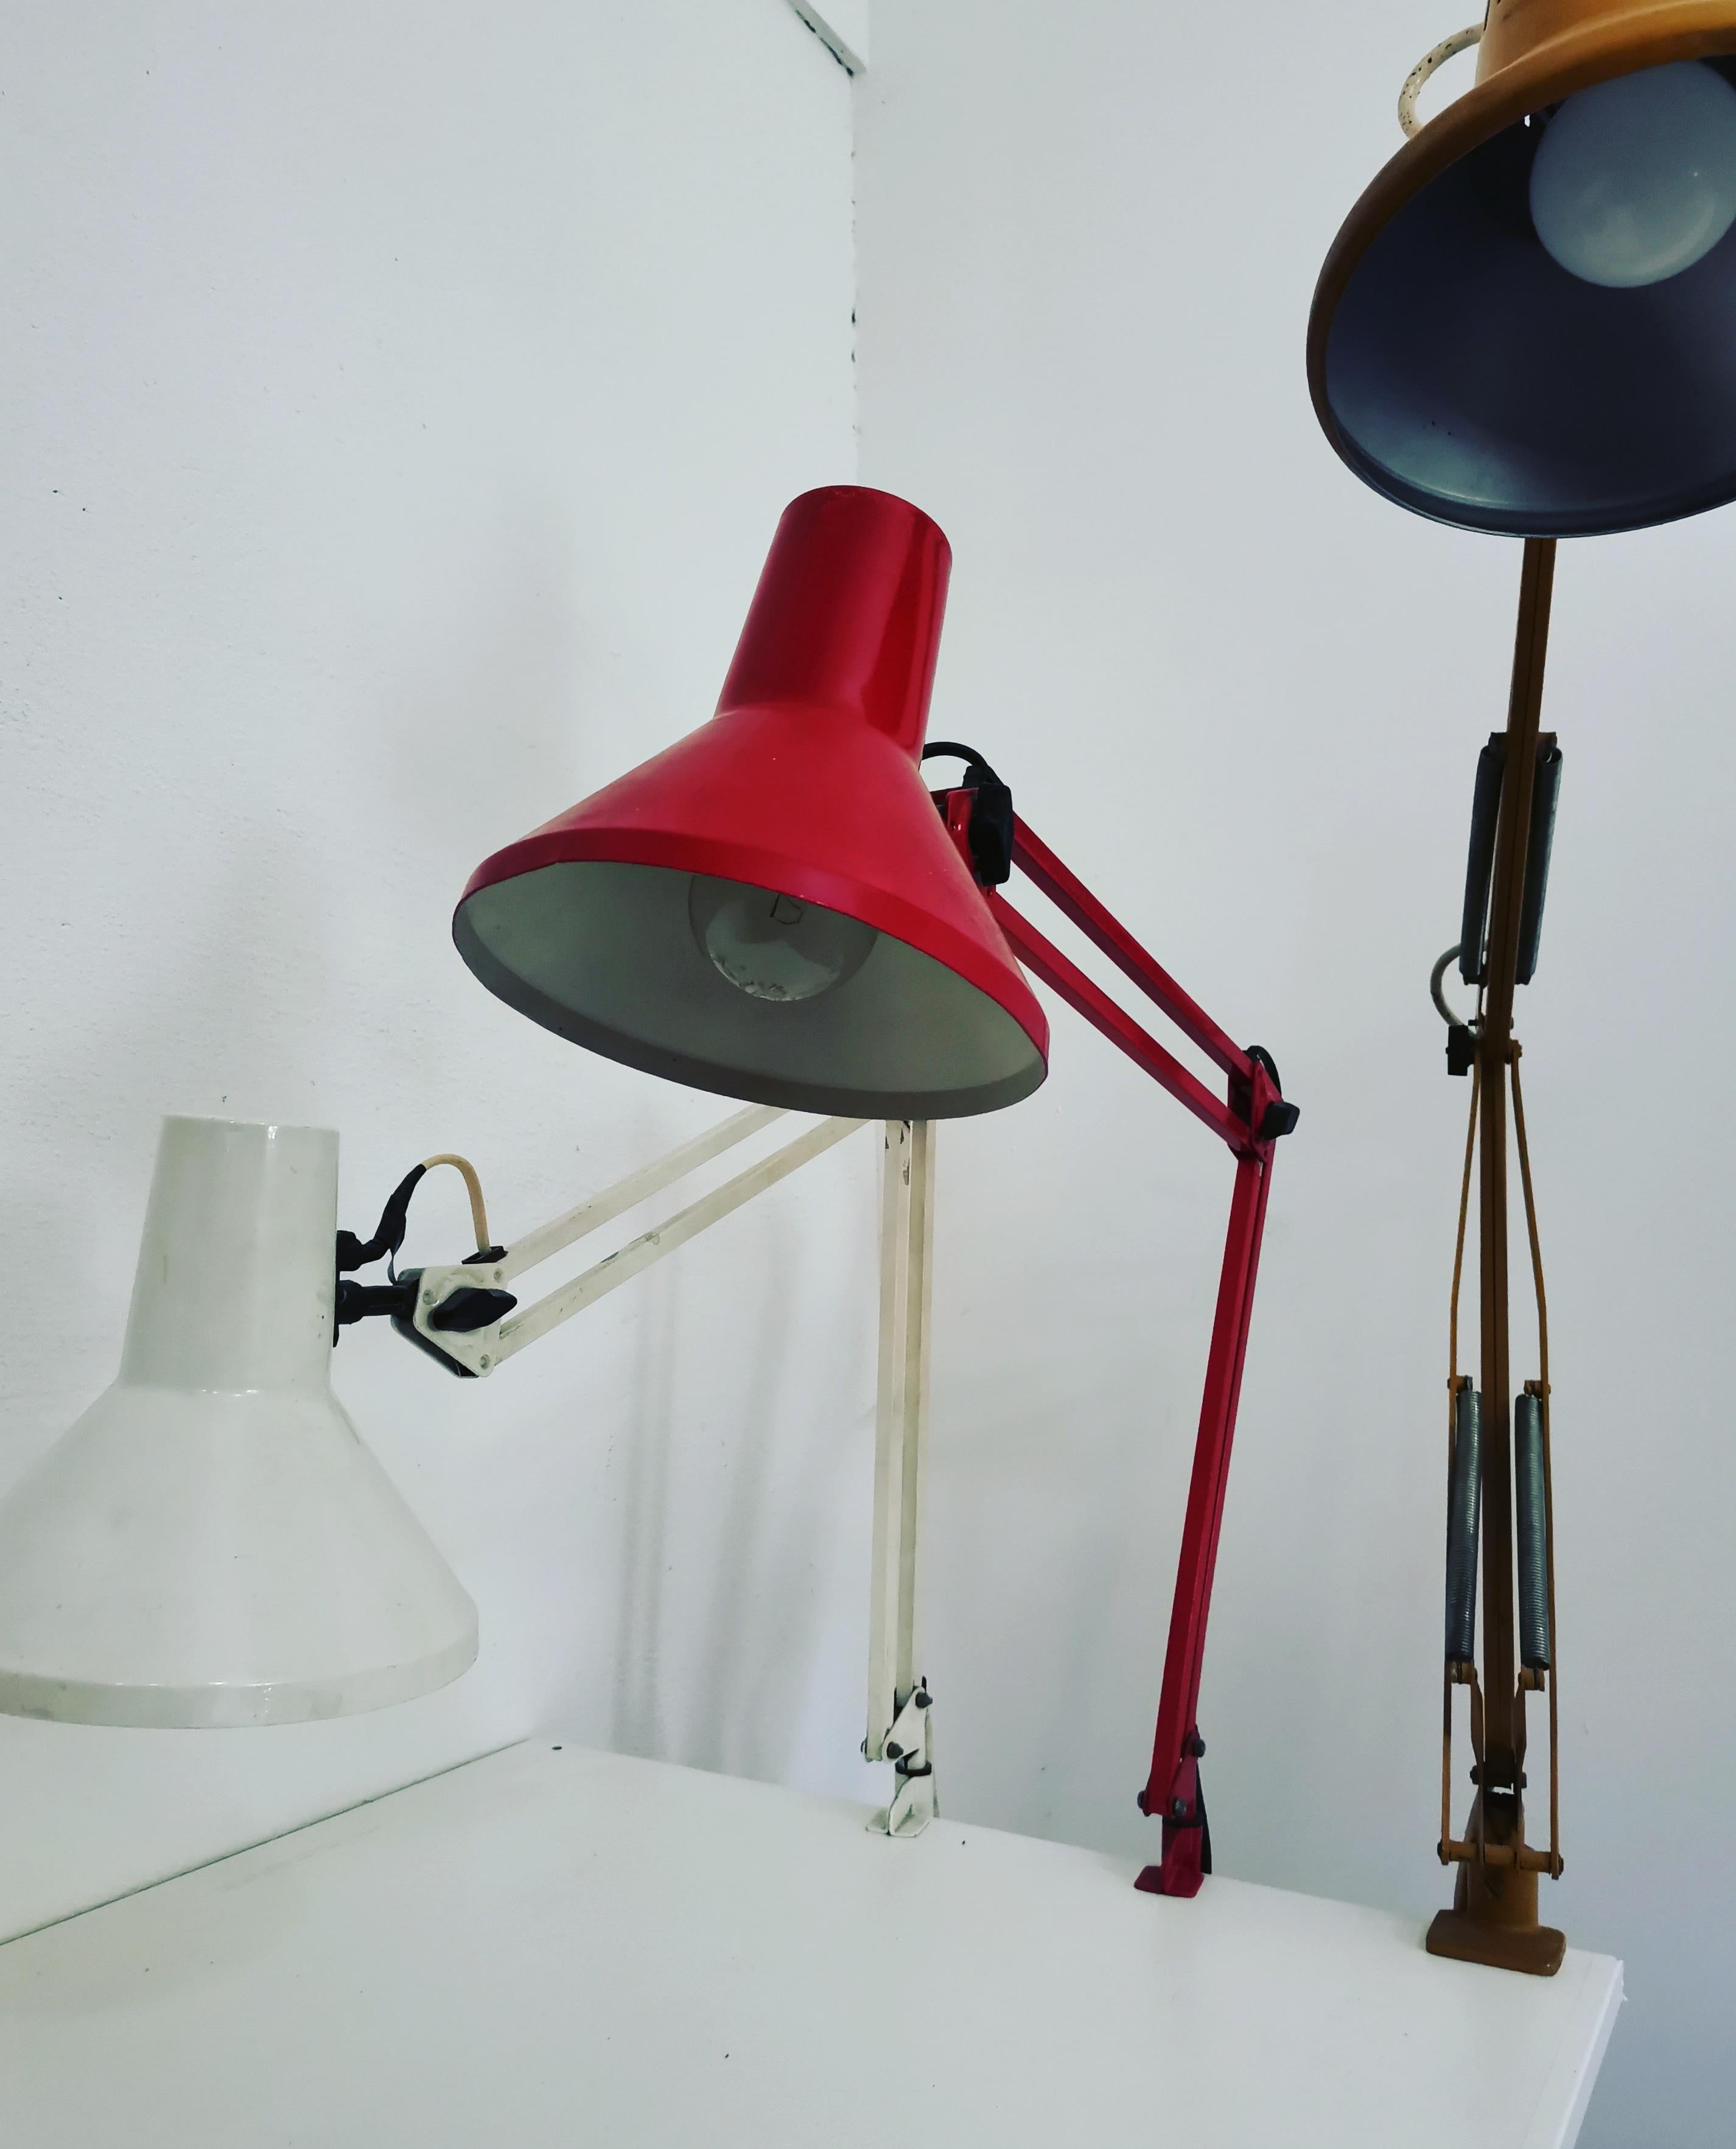 Mid-Century Modern Architect Adjustable Swing-Arm Desk Lamp, 1 of 3, 1970s